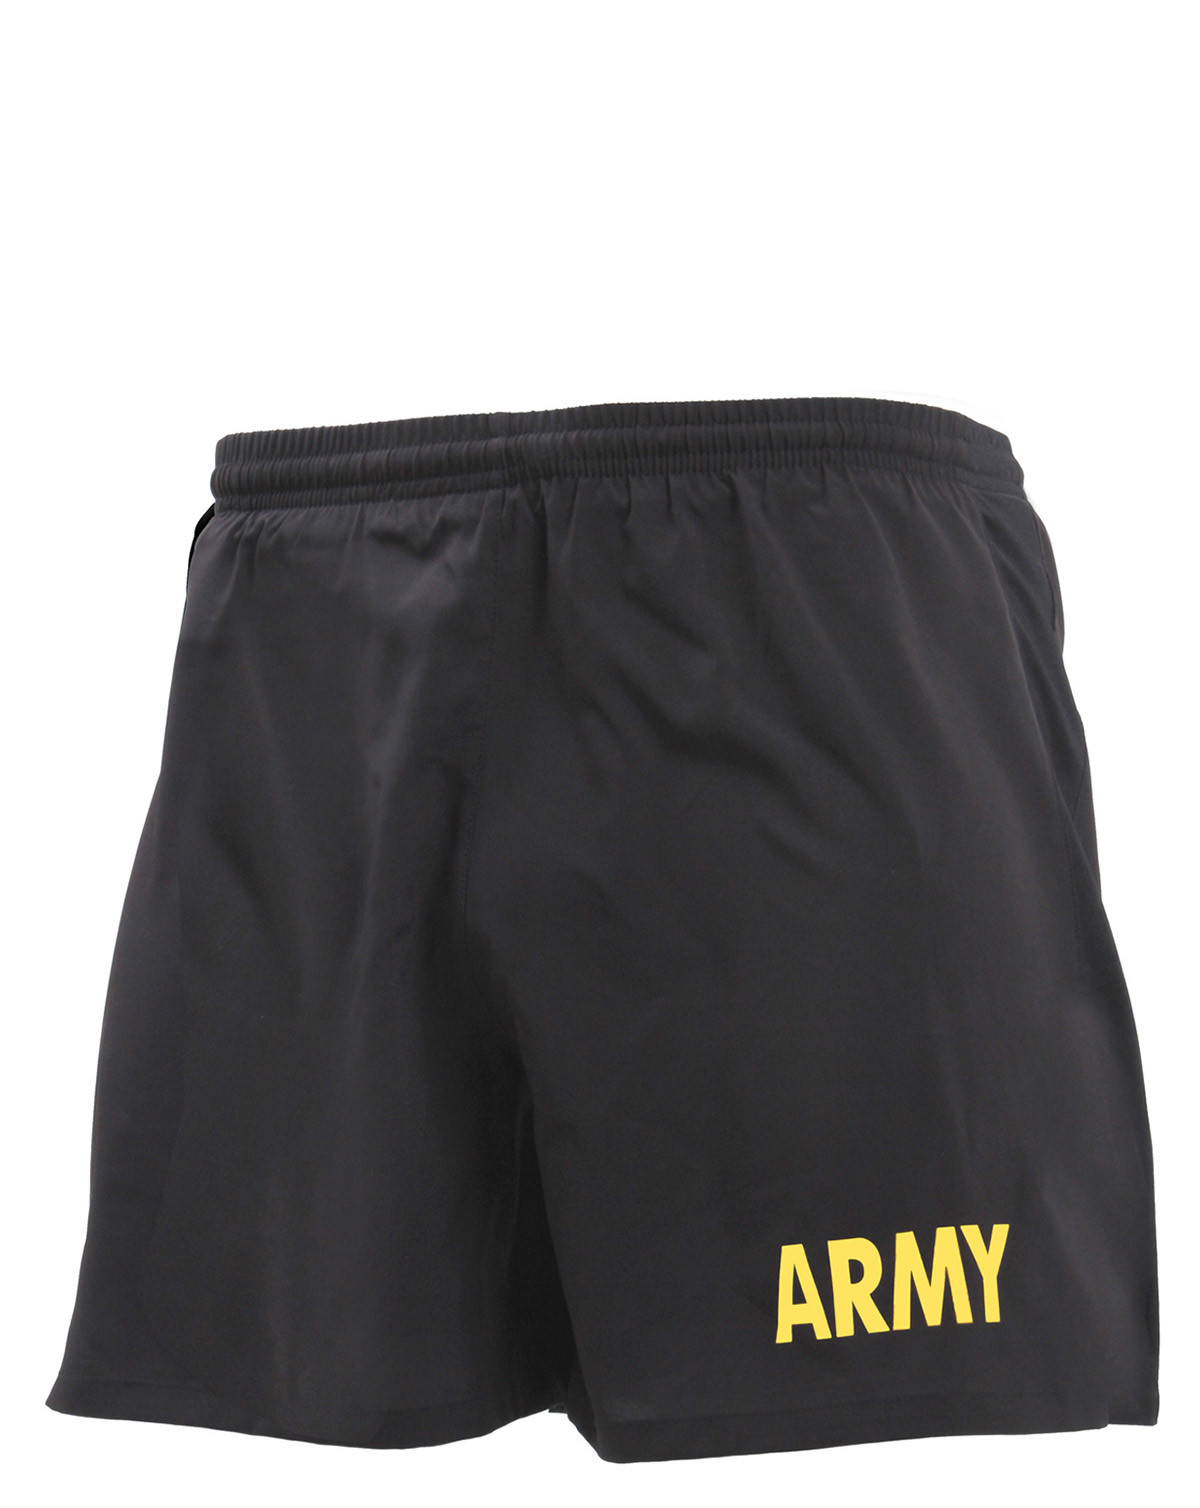 Rothco Army PT Trænings Shorts (Sort, XL)